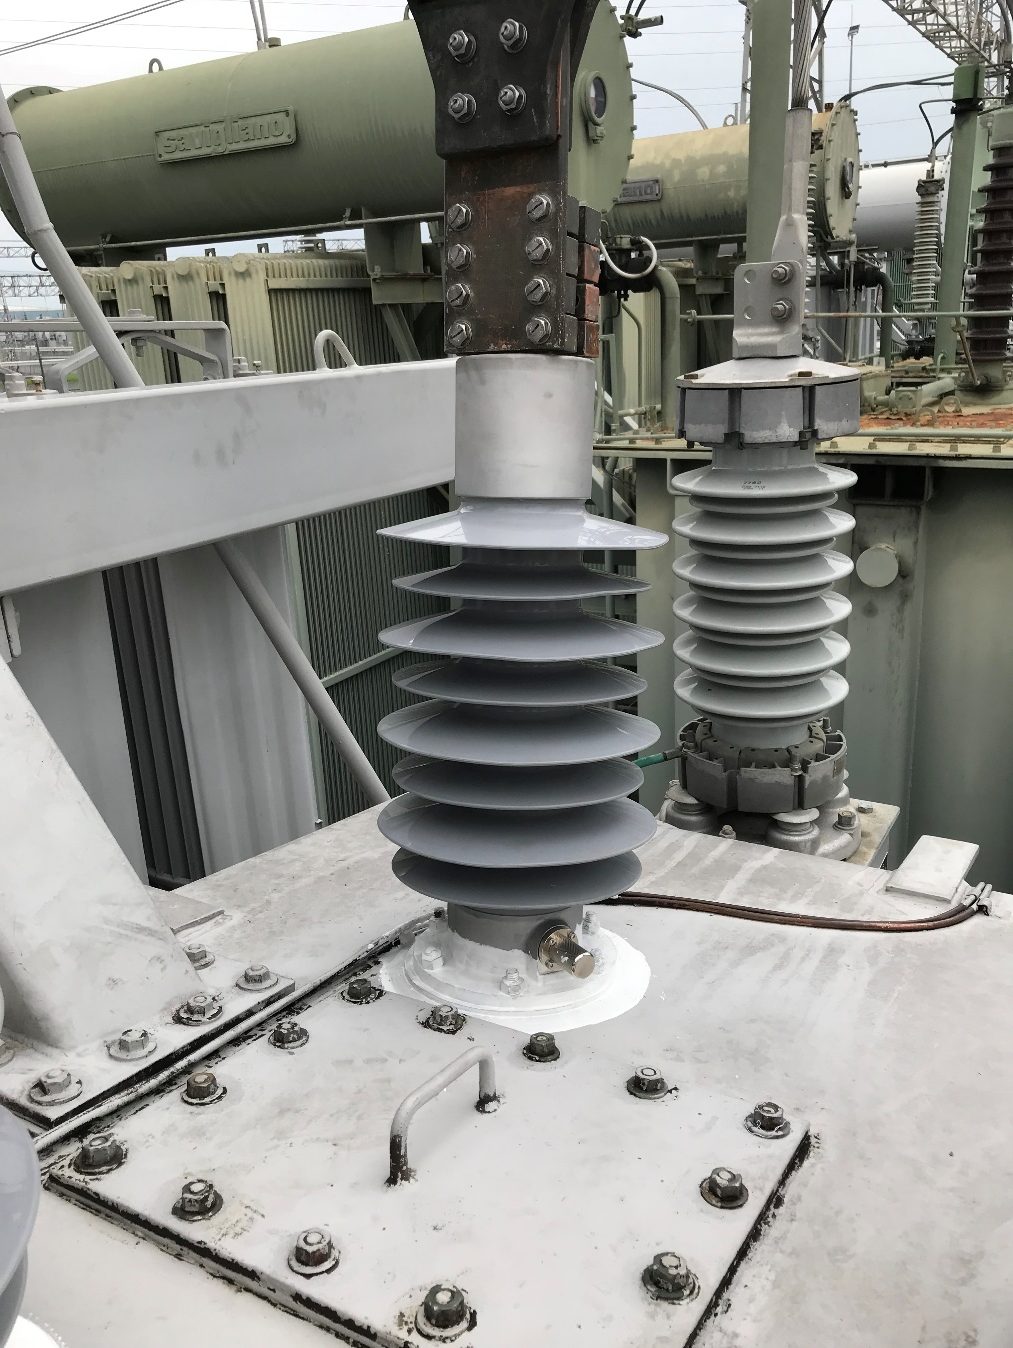 TPNZ Bushing Replacement with New 33 kV RIF® Bushings